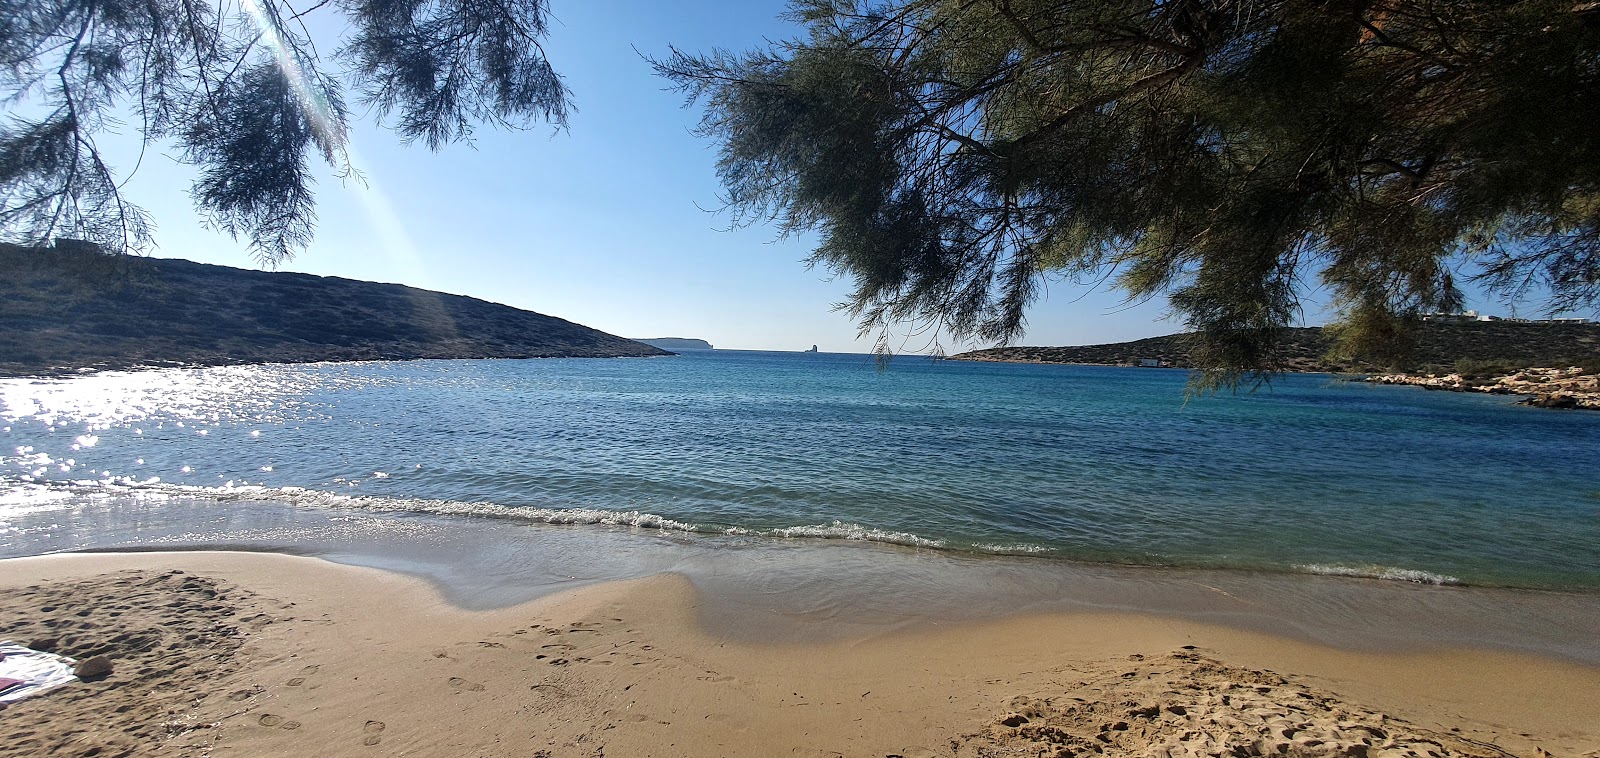 Foto de Playa de Agia Irini y su hermoso paisaje